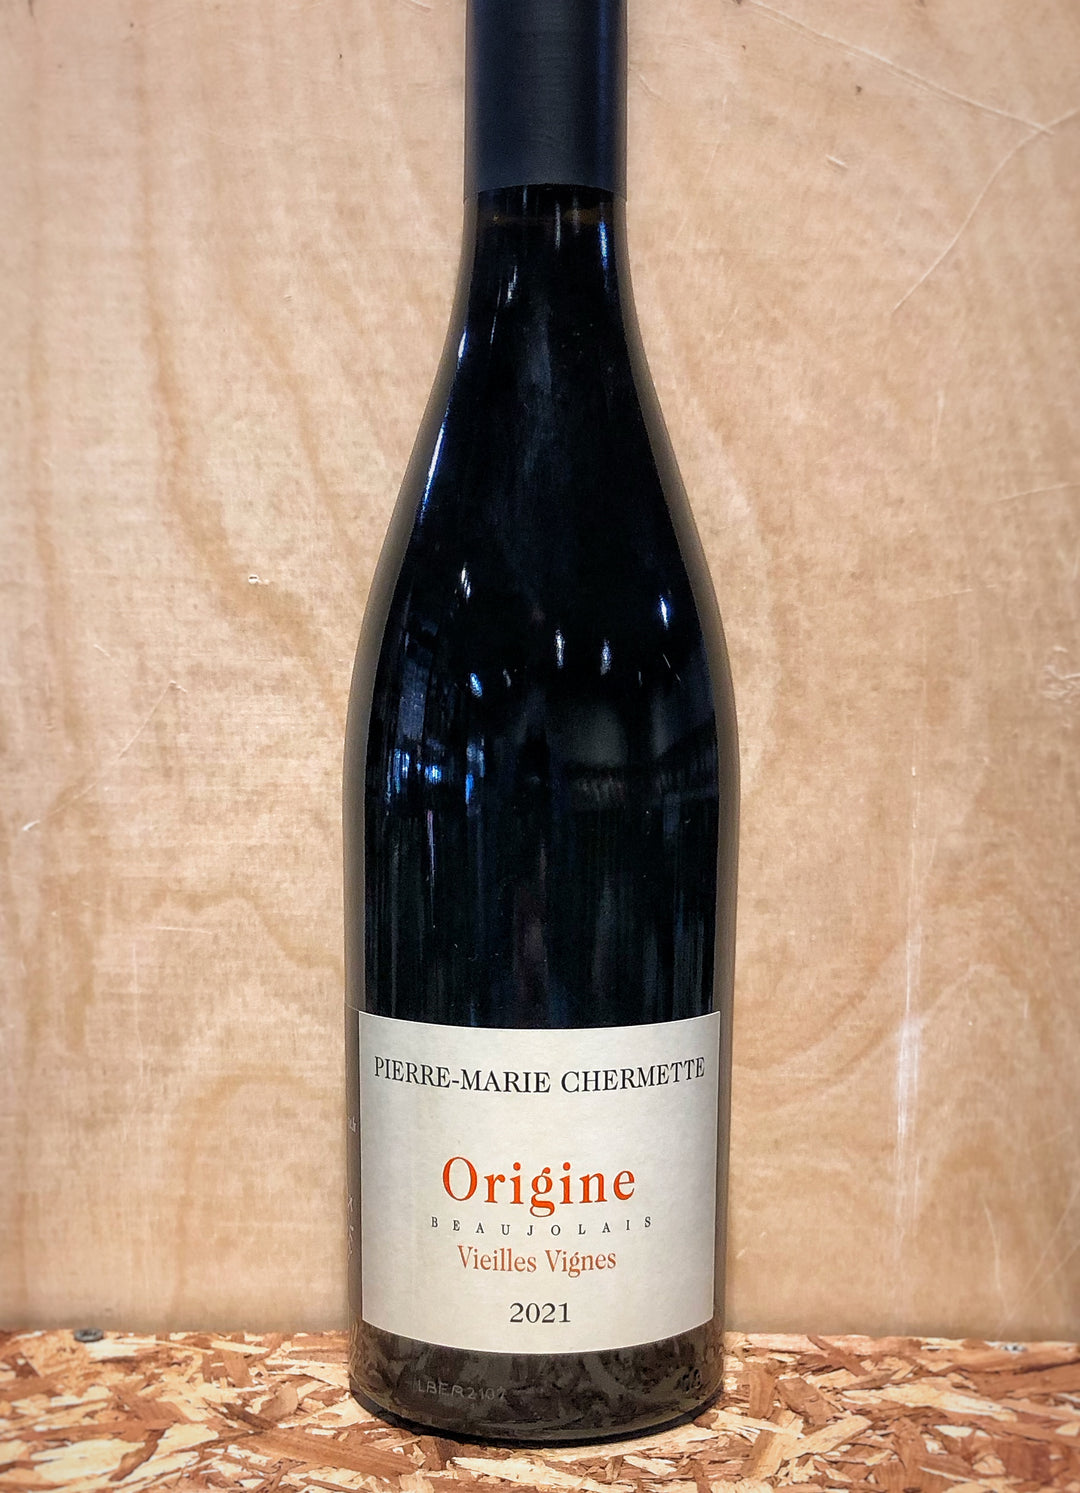 Pierre-Marie Chermette Beaujolais Origine 'Vieilles Vignes' 2021 (Beaujolais, France)